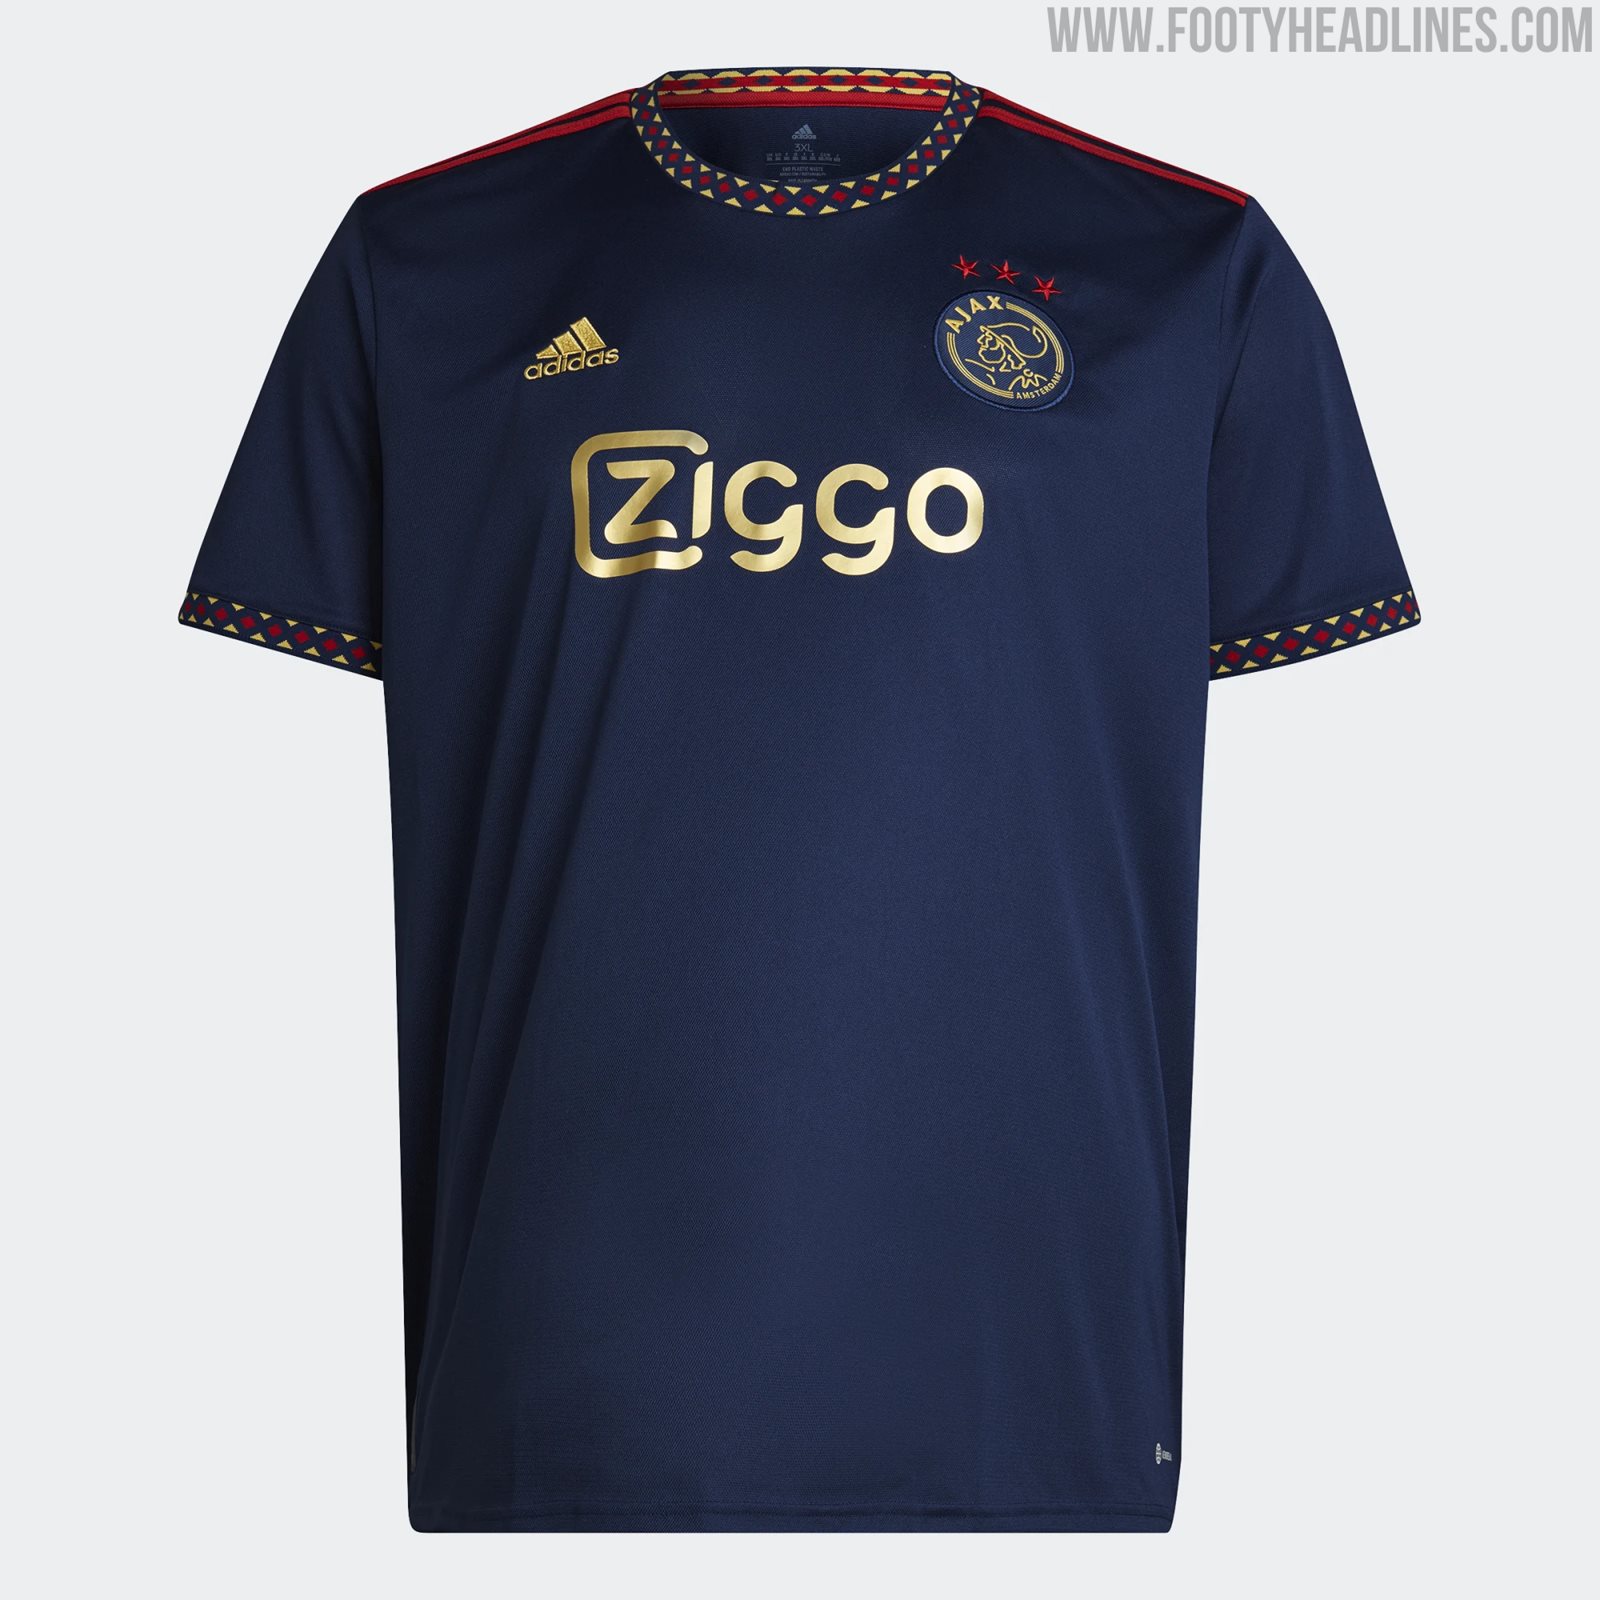 Ajax Wear Tri-Colored Outfit Against Feyenoord - Footy